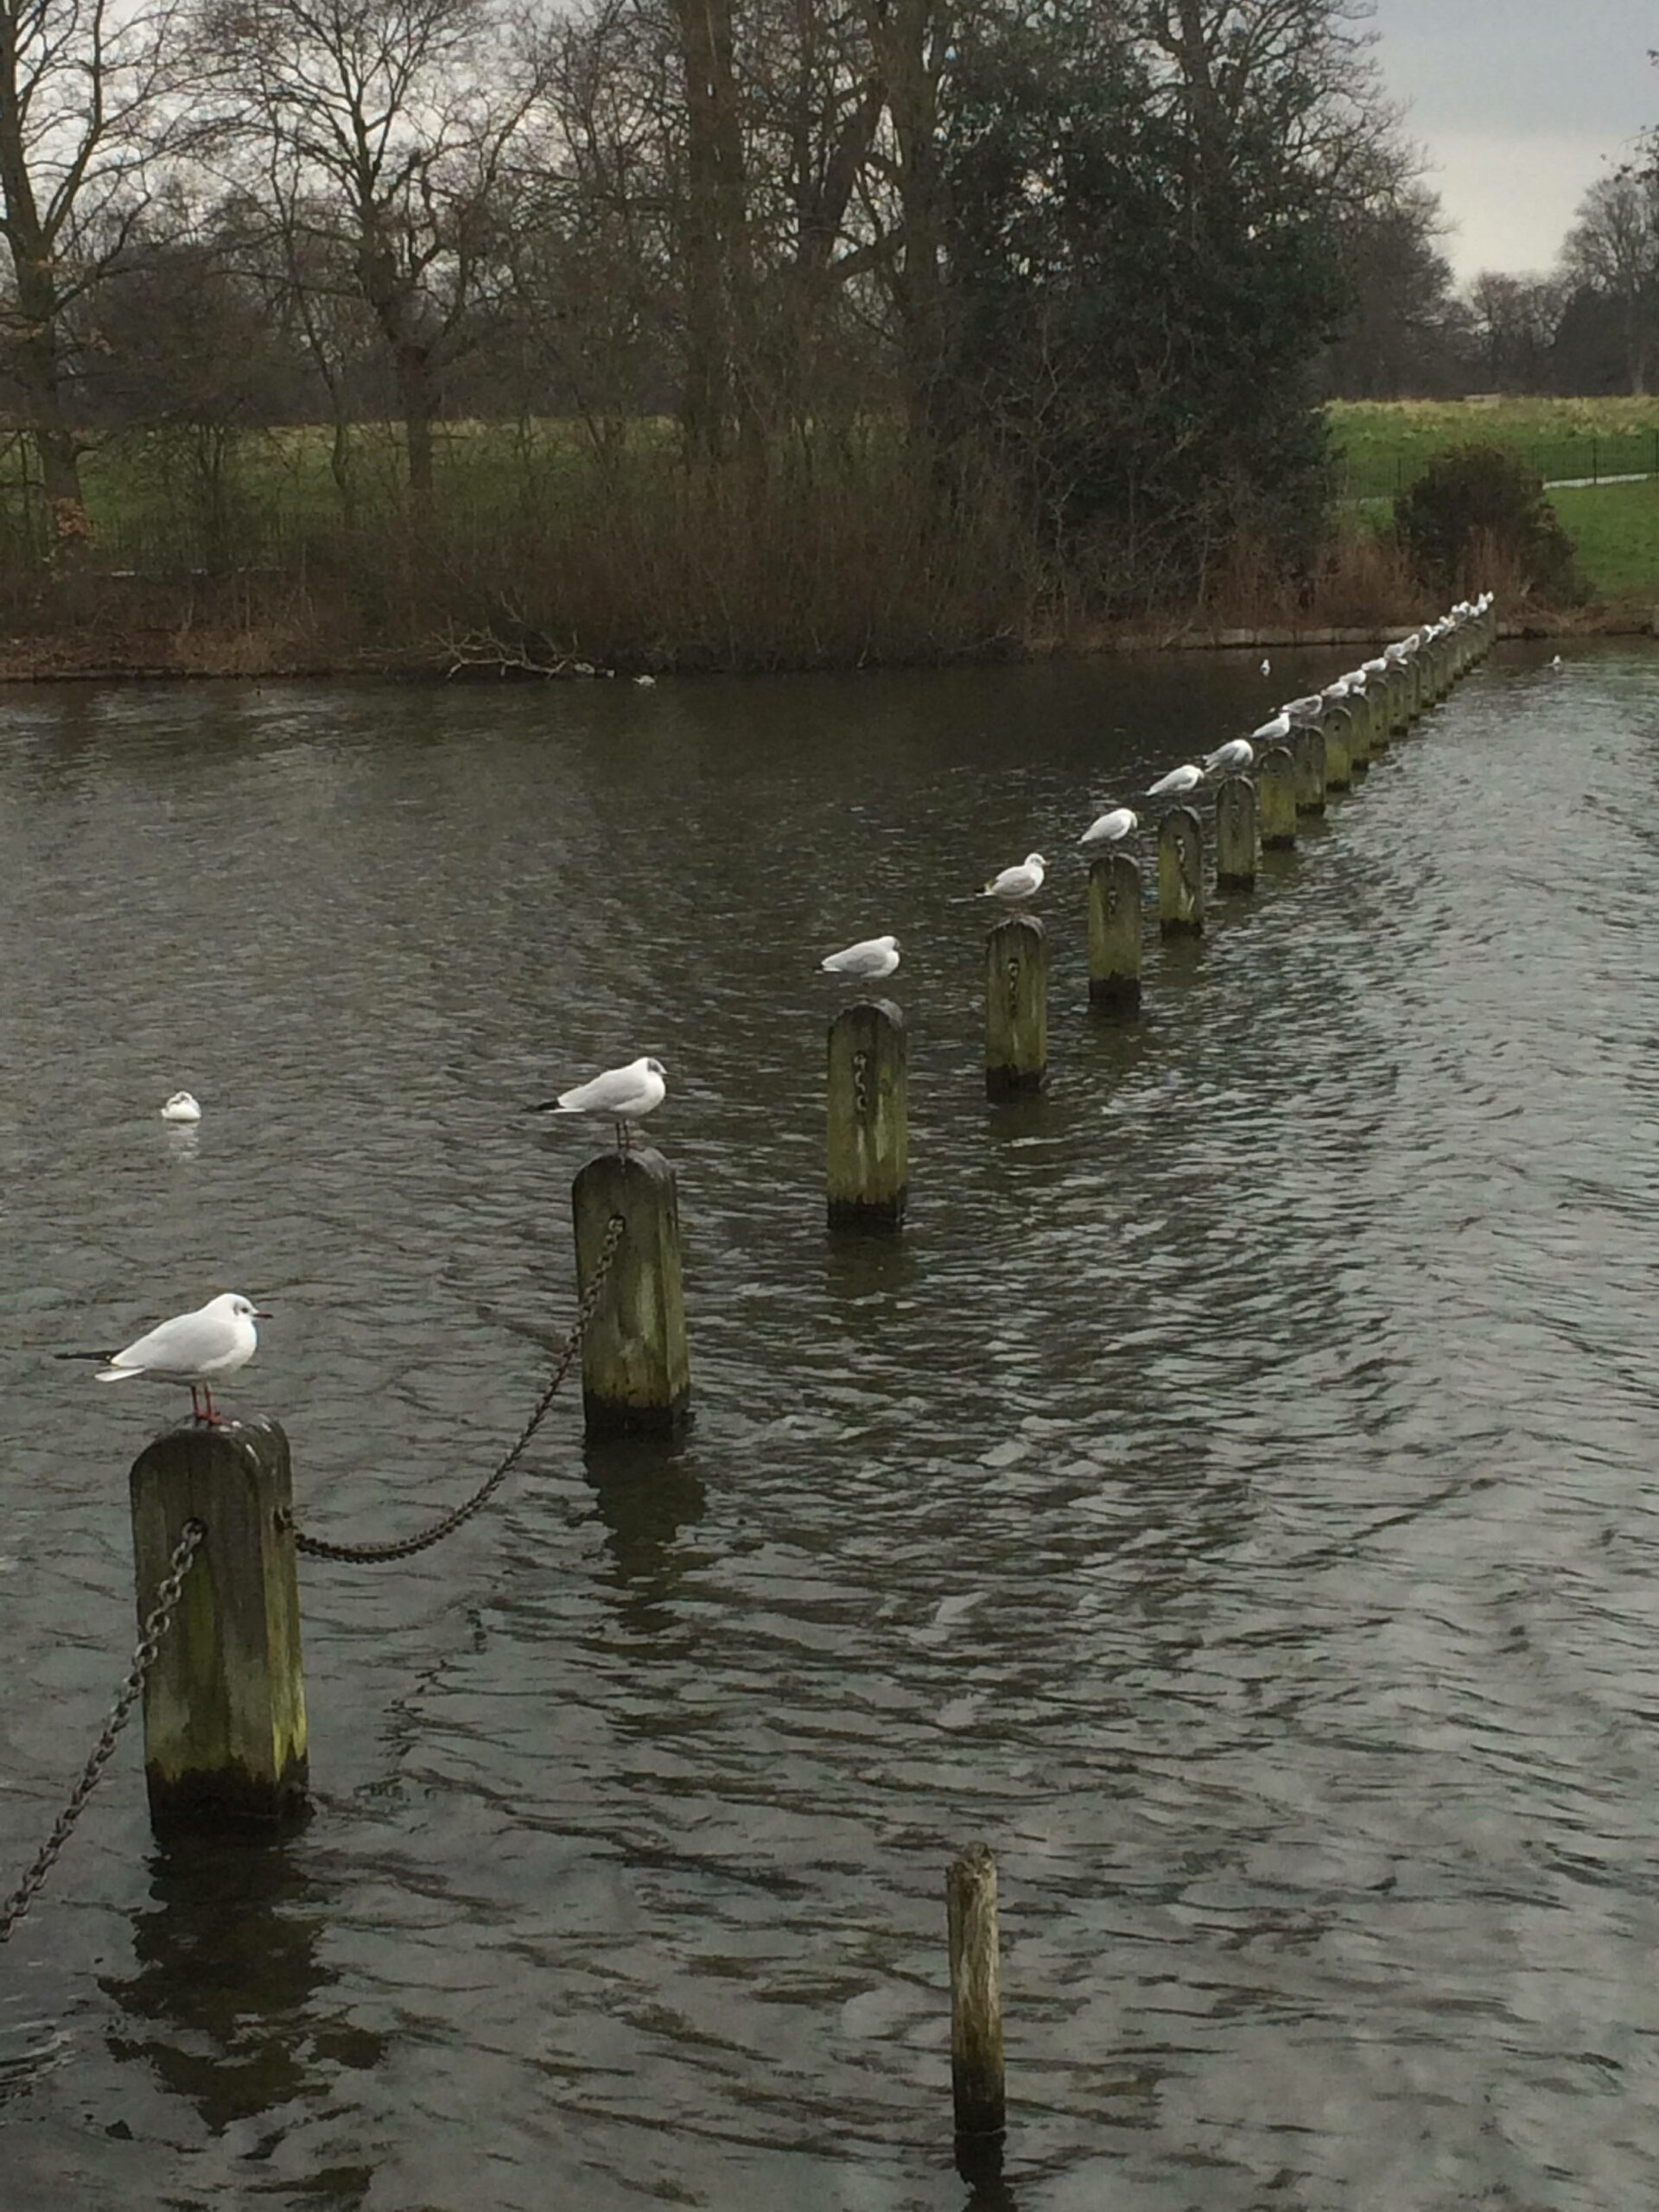 seagulls sitting on pillars in a row